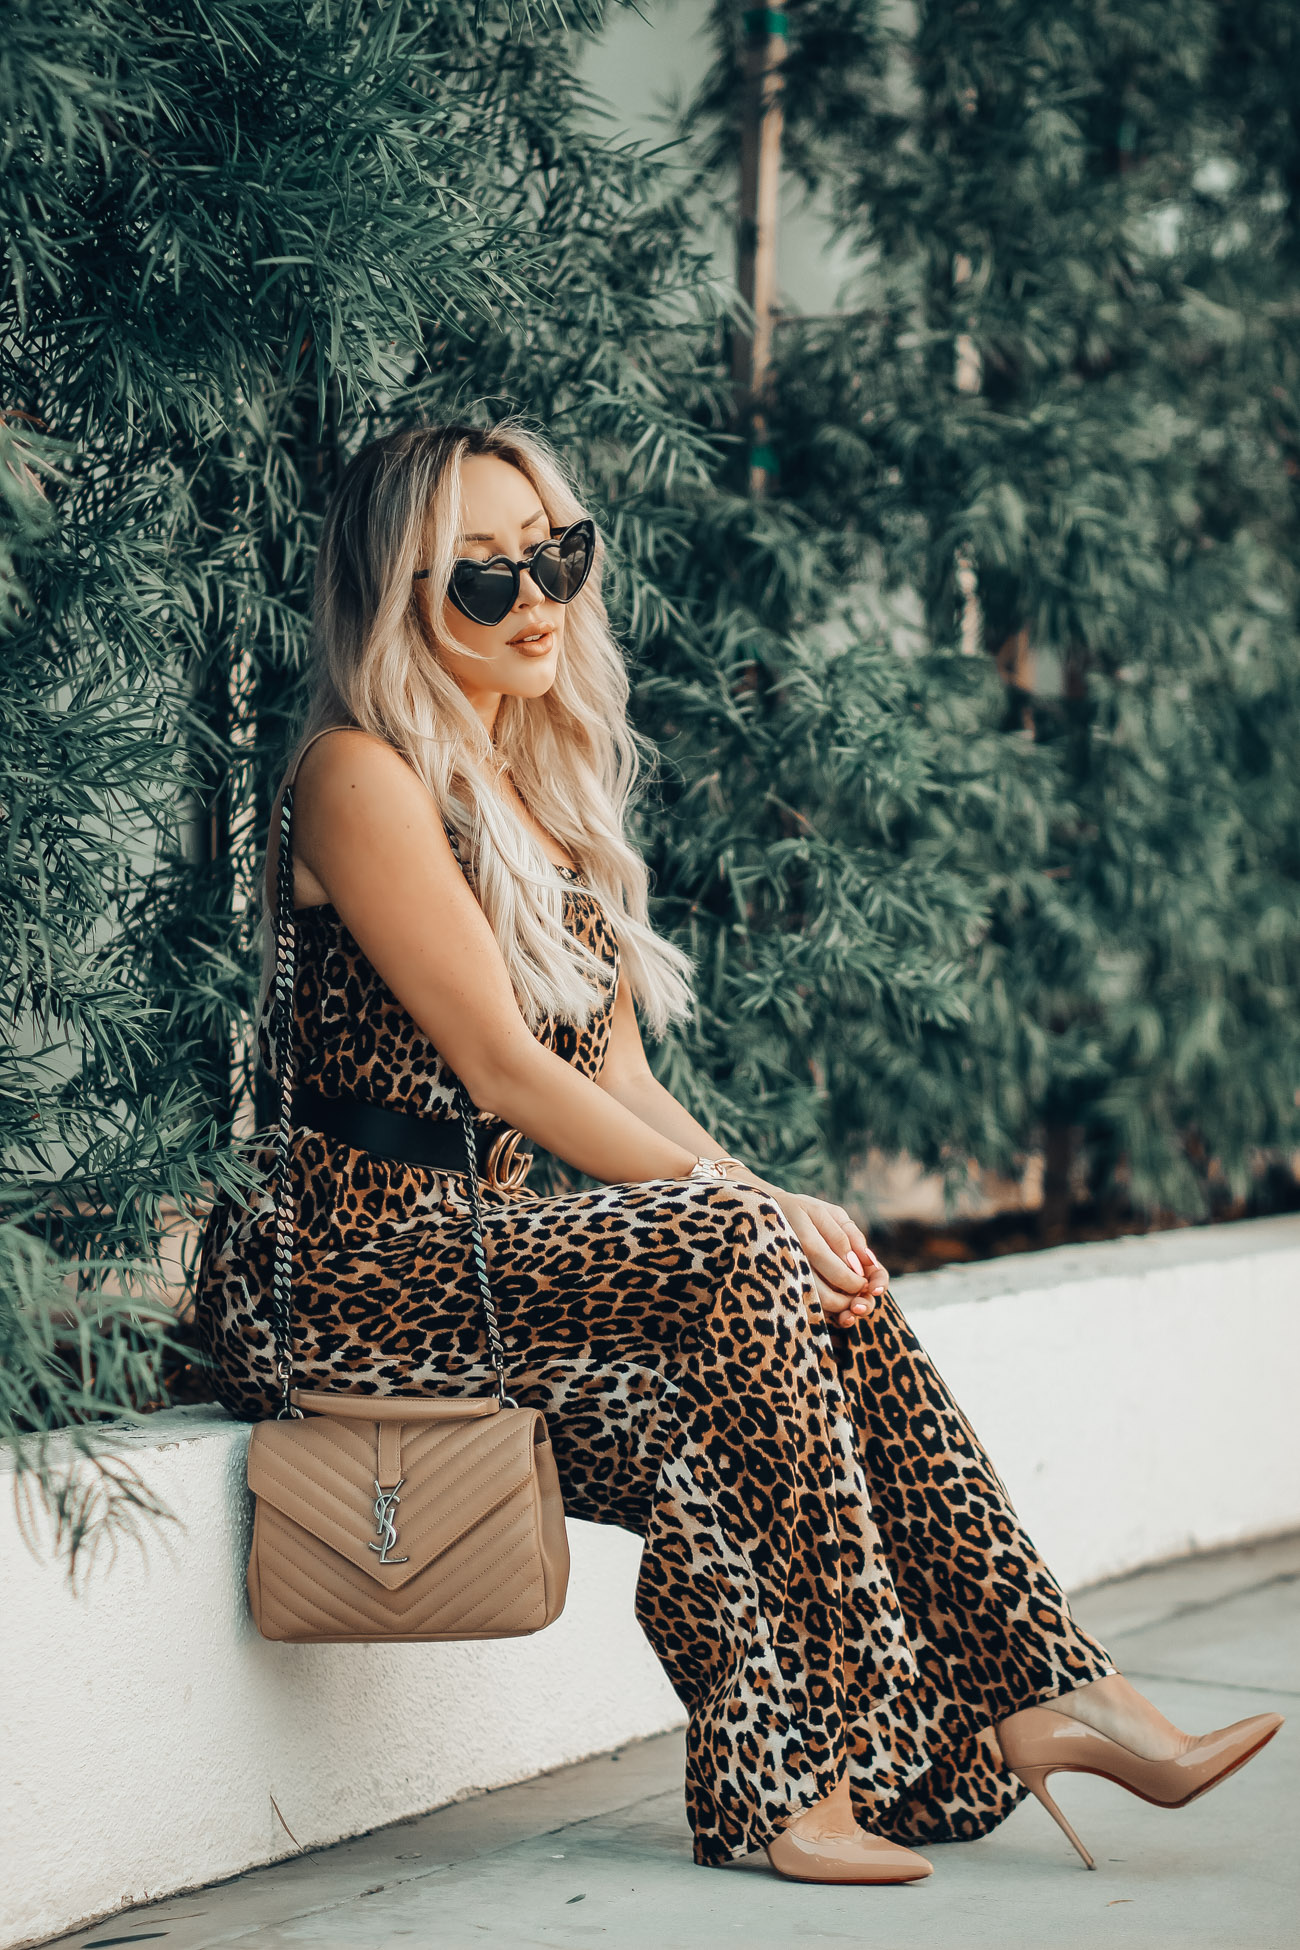 Leopard Jumpsuit | Gucci Belt | Heart Sunnies | Blondie in the City by Hayley Larue